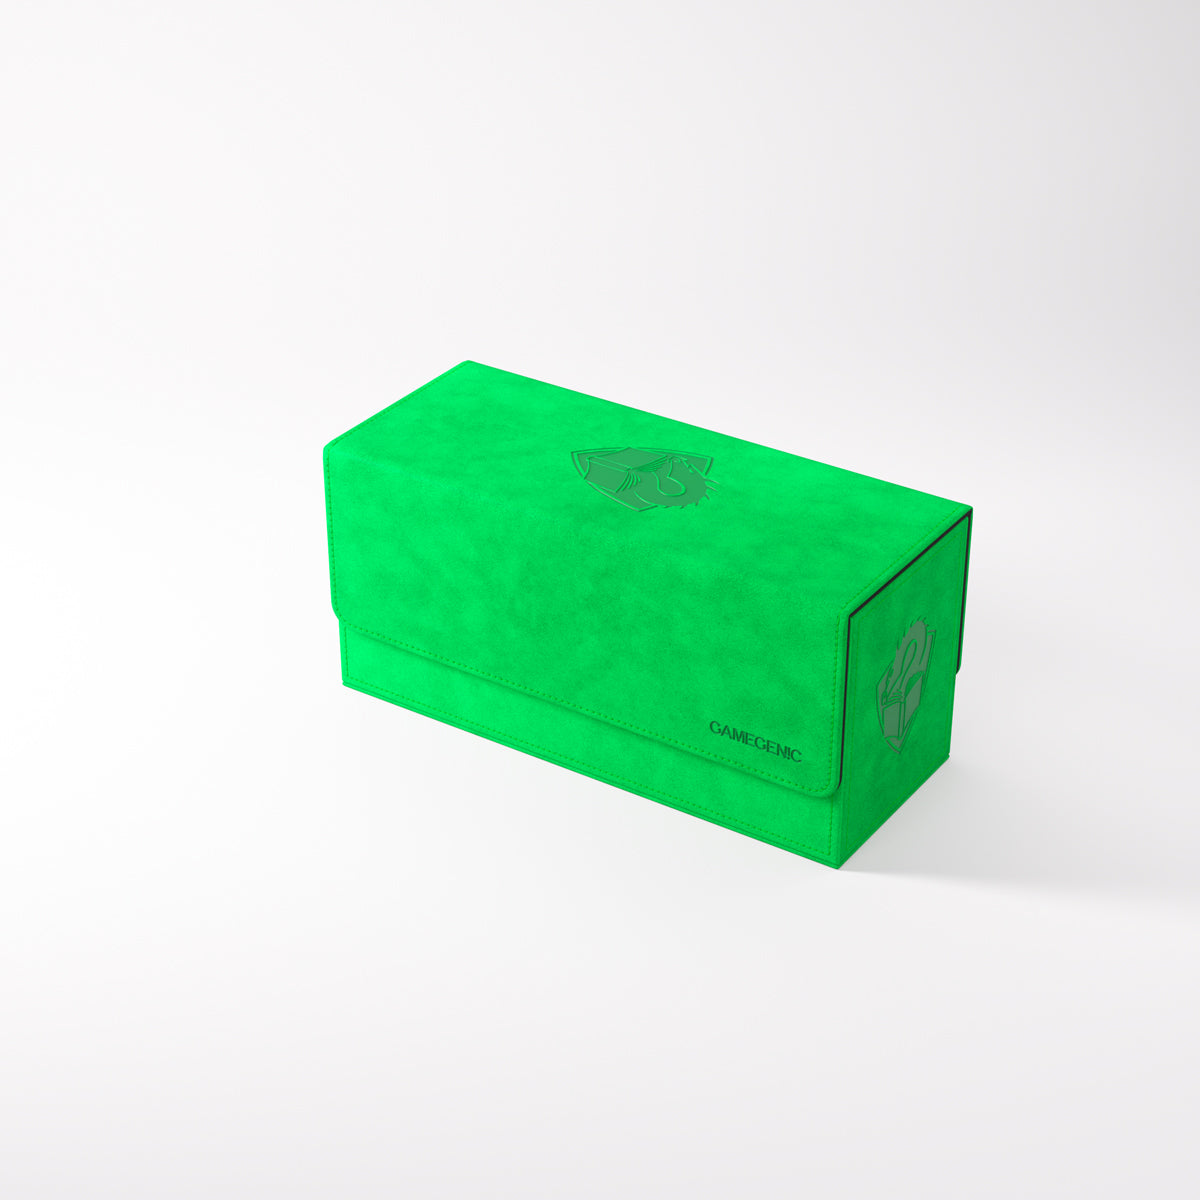 The Academic 133+ XL Convertible Green/Black Deck Box (133ct)